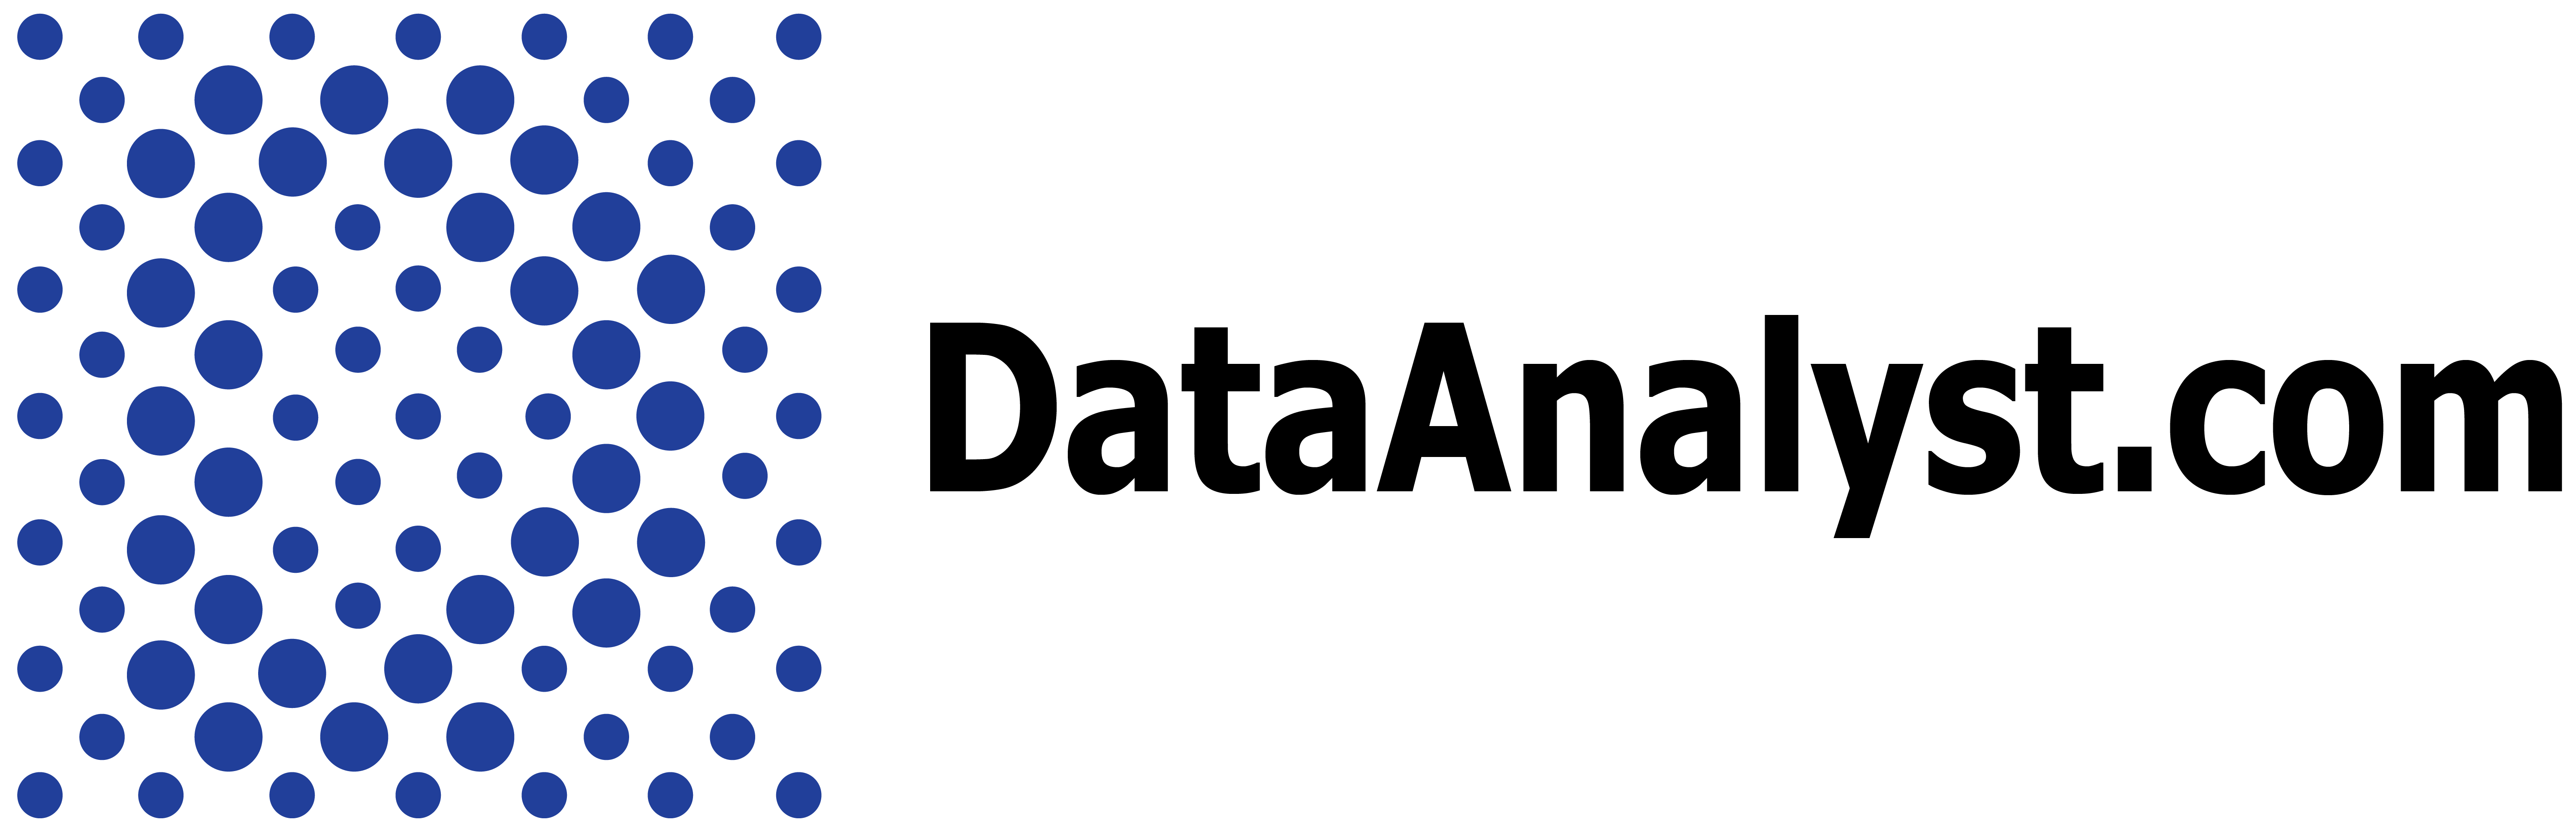 DataAnalyst.com - banner